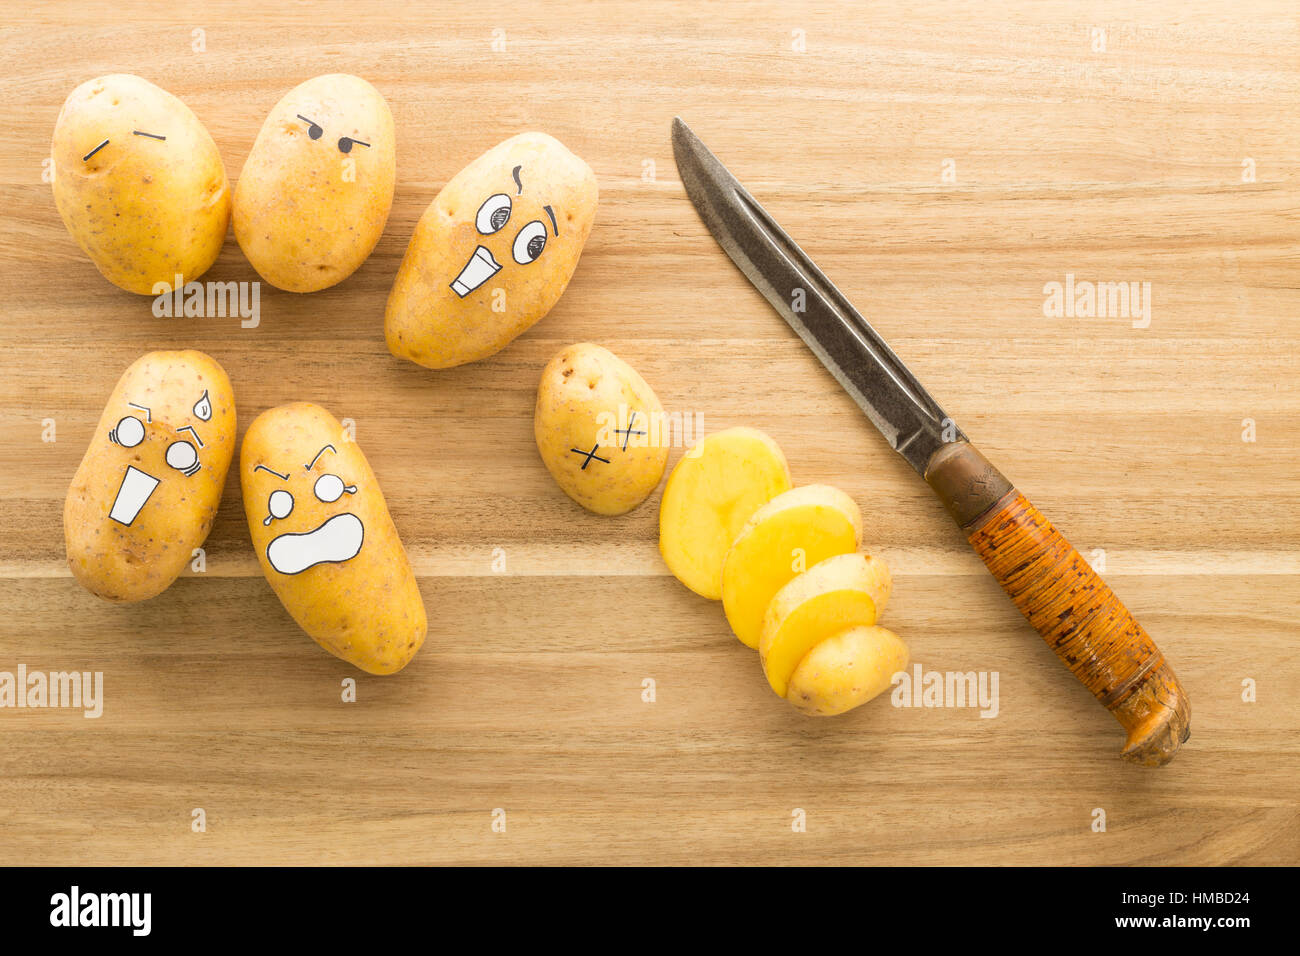 https://c8.alamy.com/comp/HMBD24/fresh-potatoes-with-cartoon-style-faces-laying-on-a-brown-cutting-HMBD24.jpg